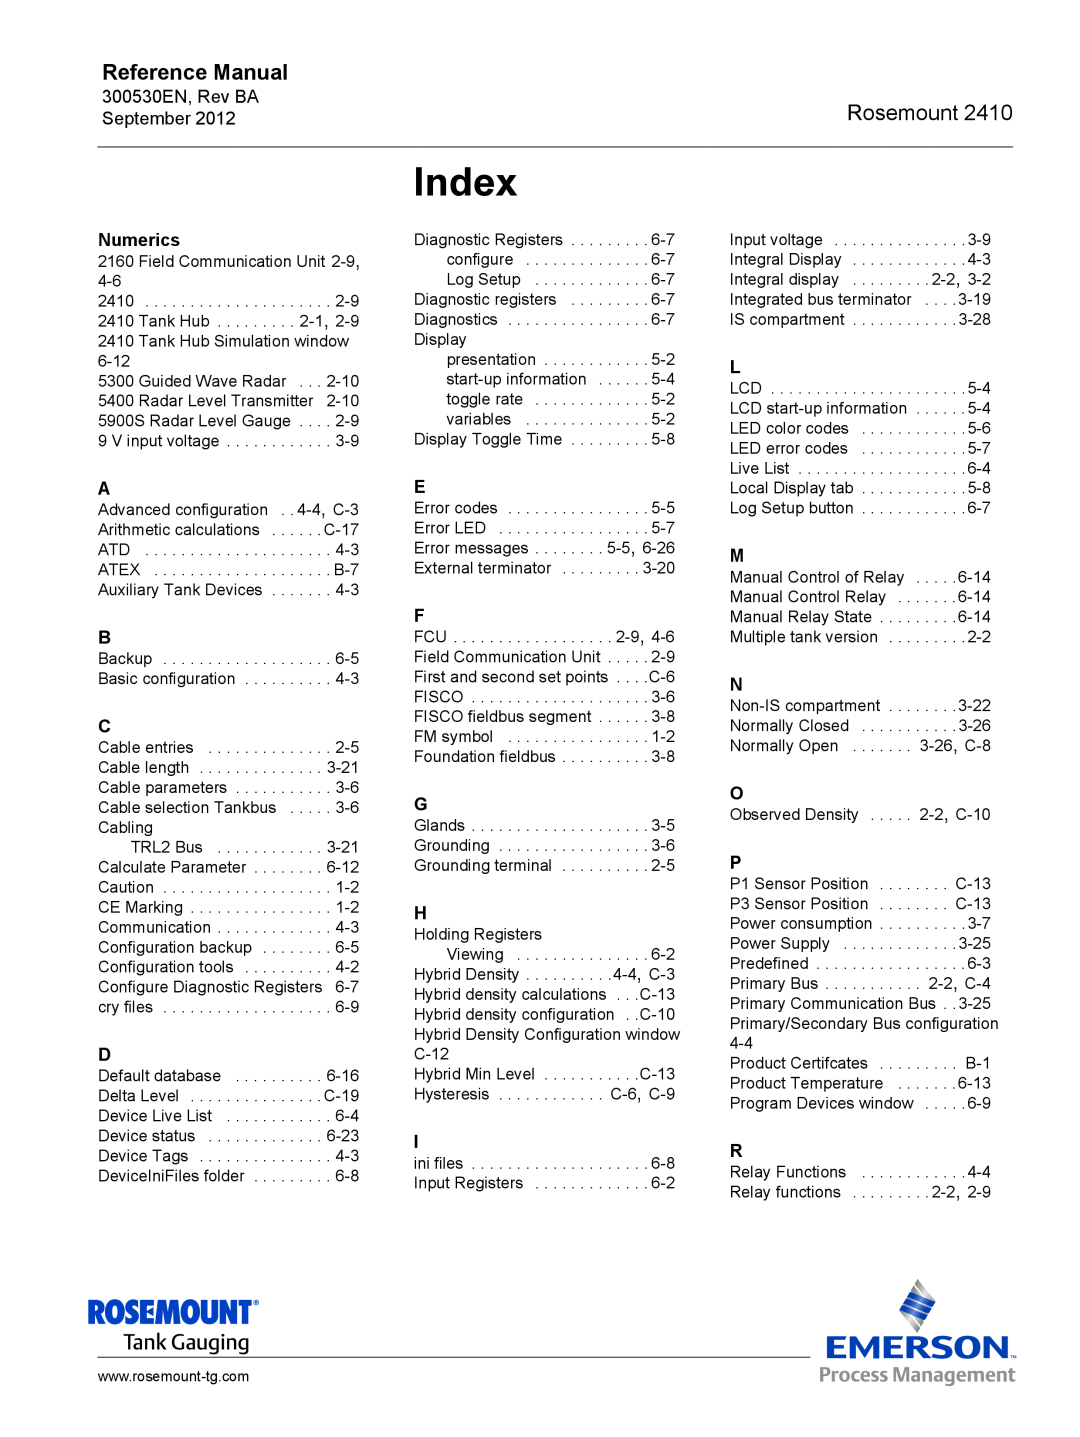 Emerson Process Management Rosemount 2410 manual Index, Numerics, Reference Manual 